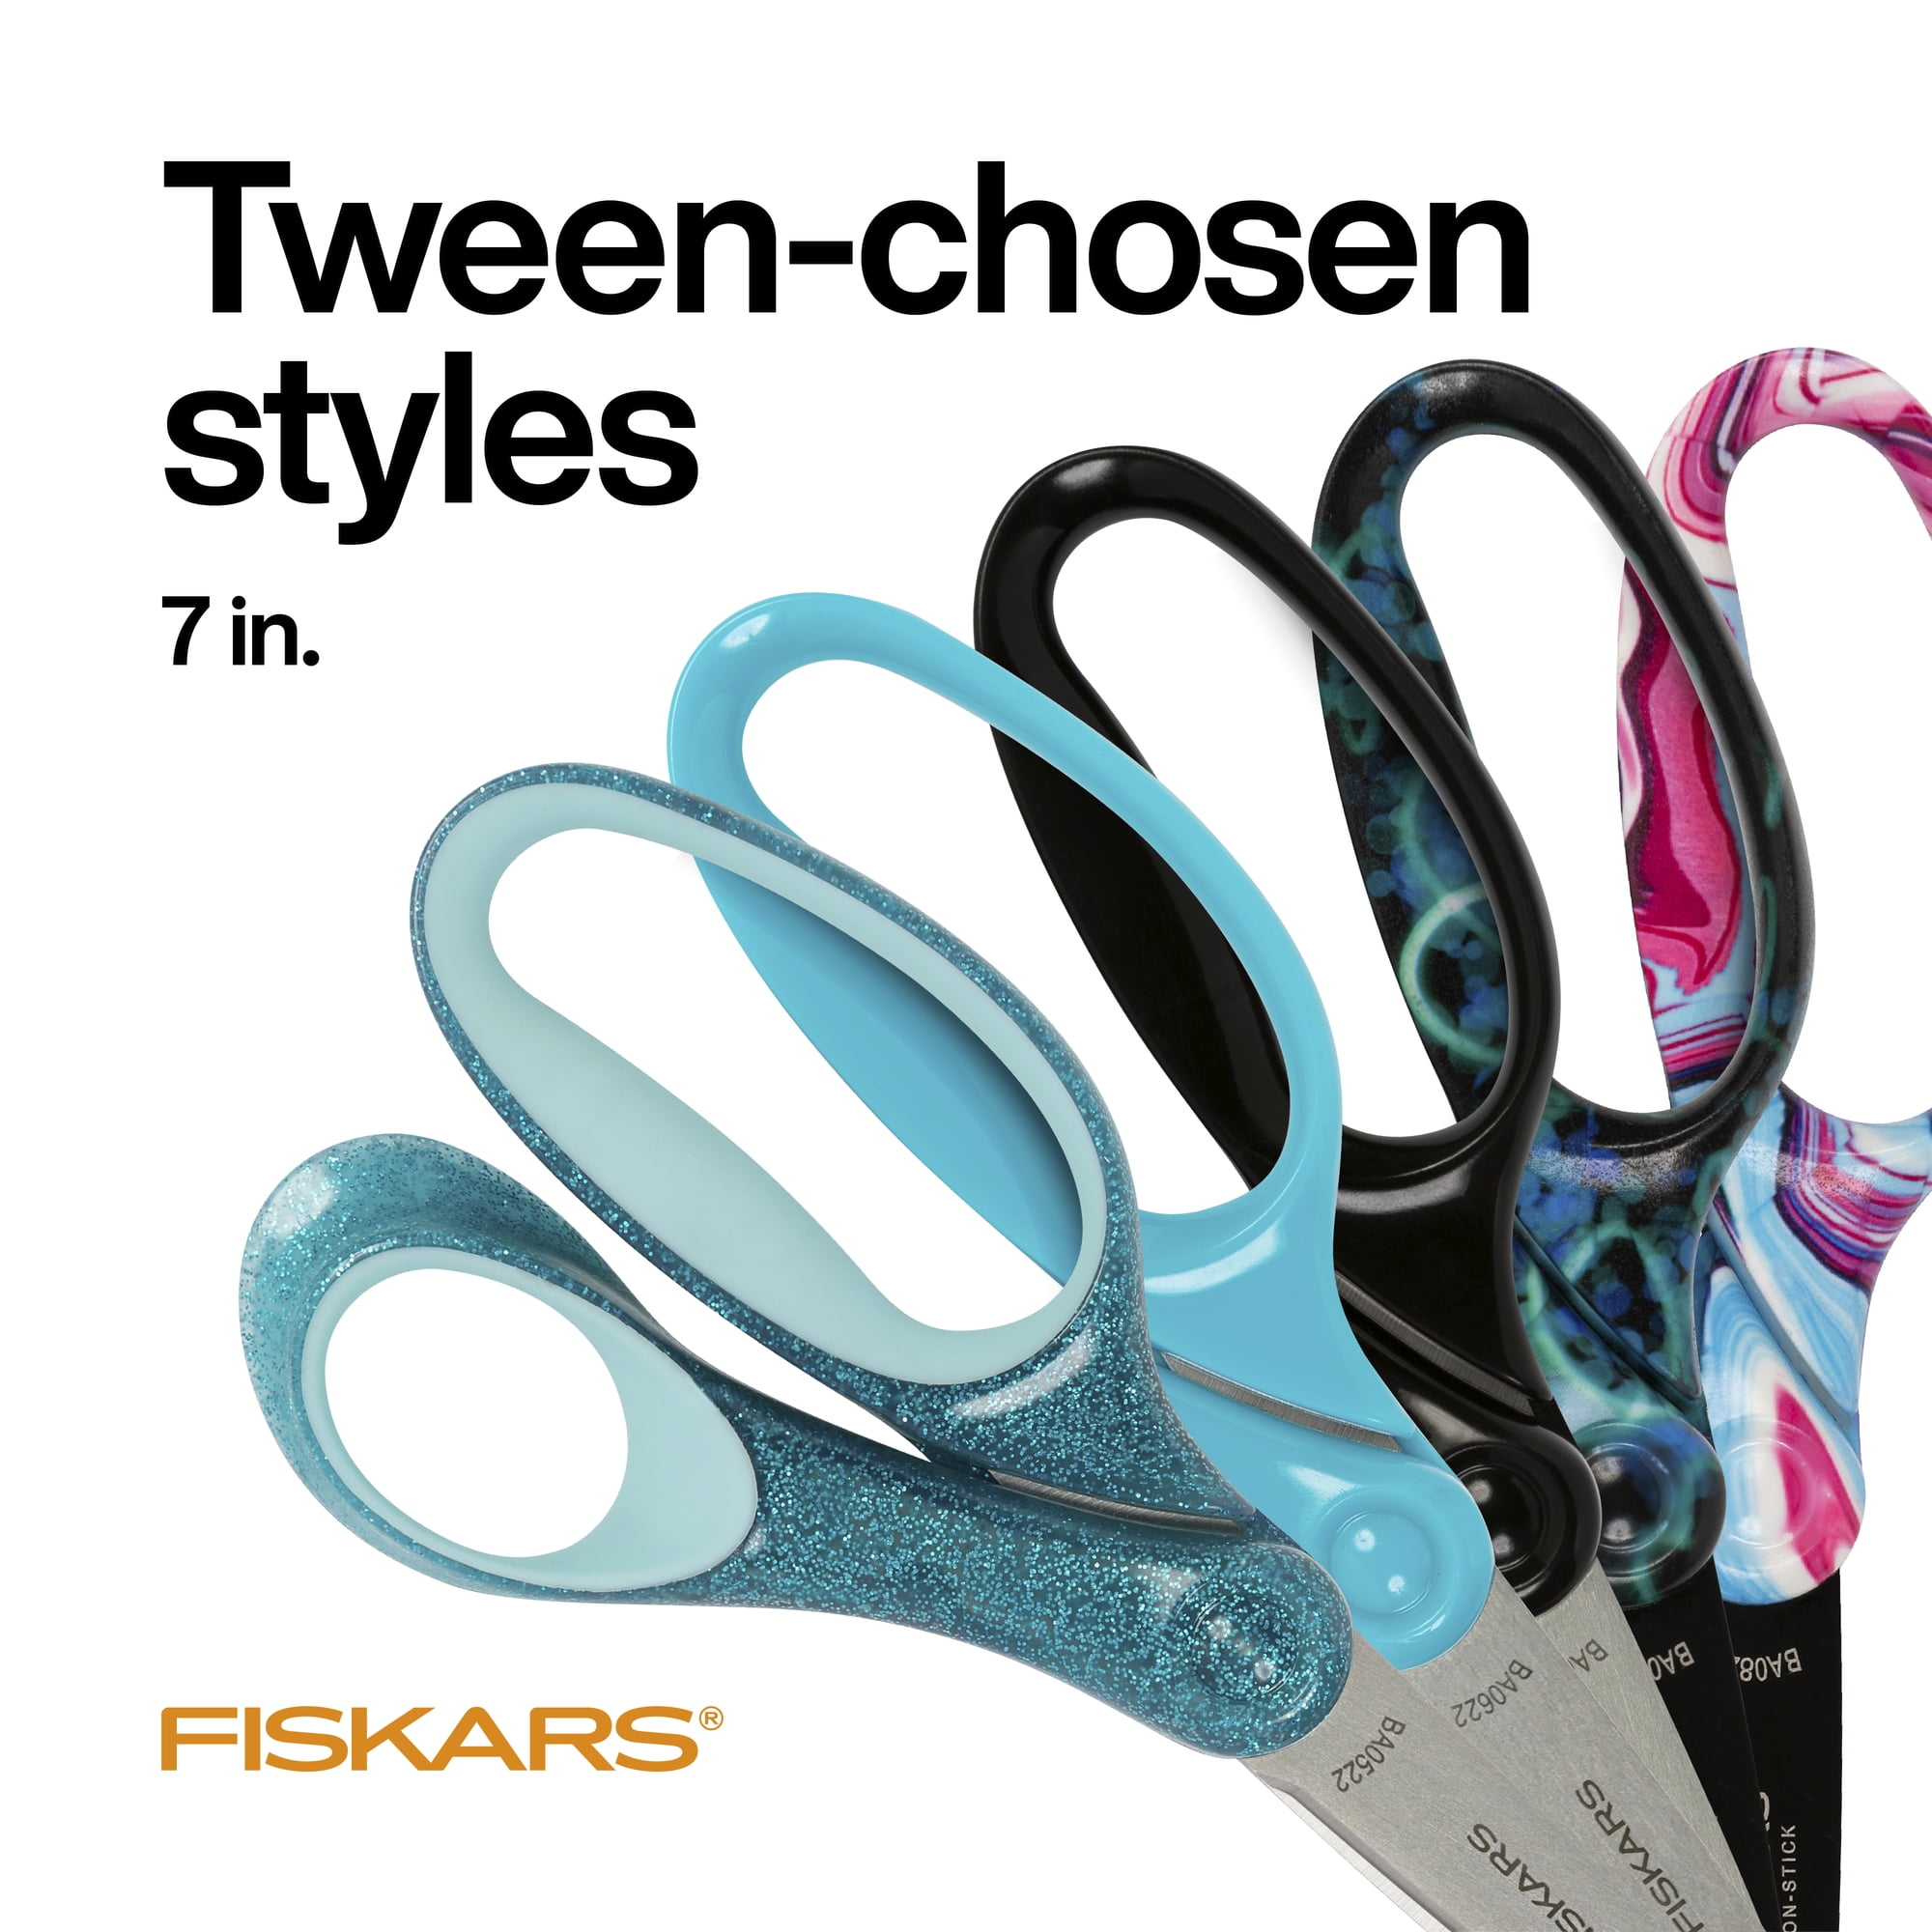 Tough Fiskars Scissors Laugh at Your Puny Abuse